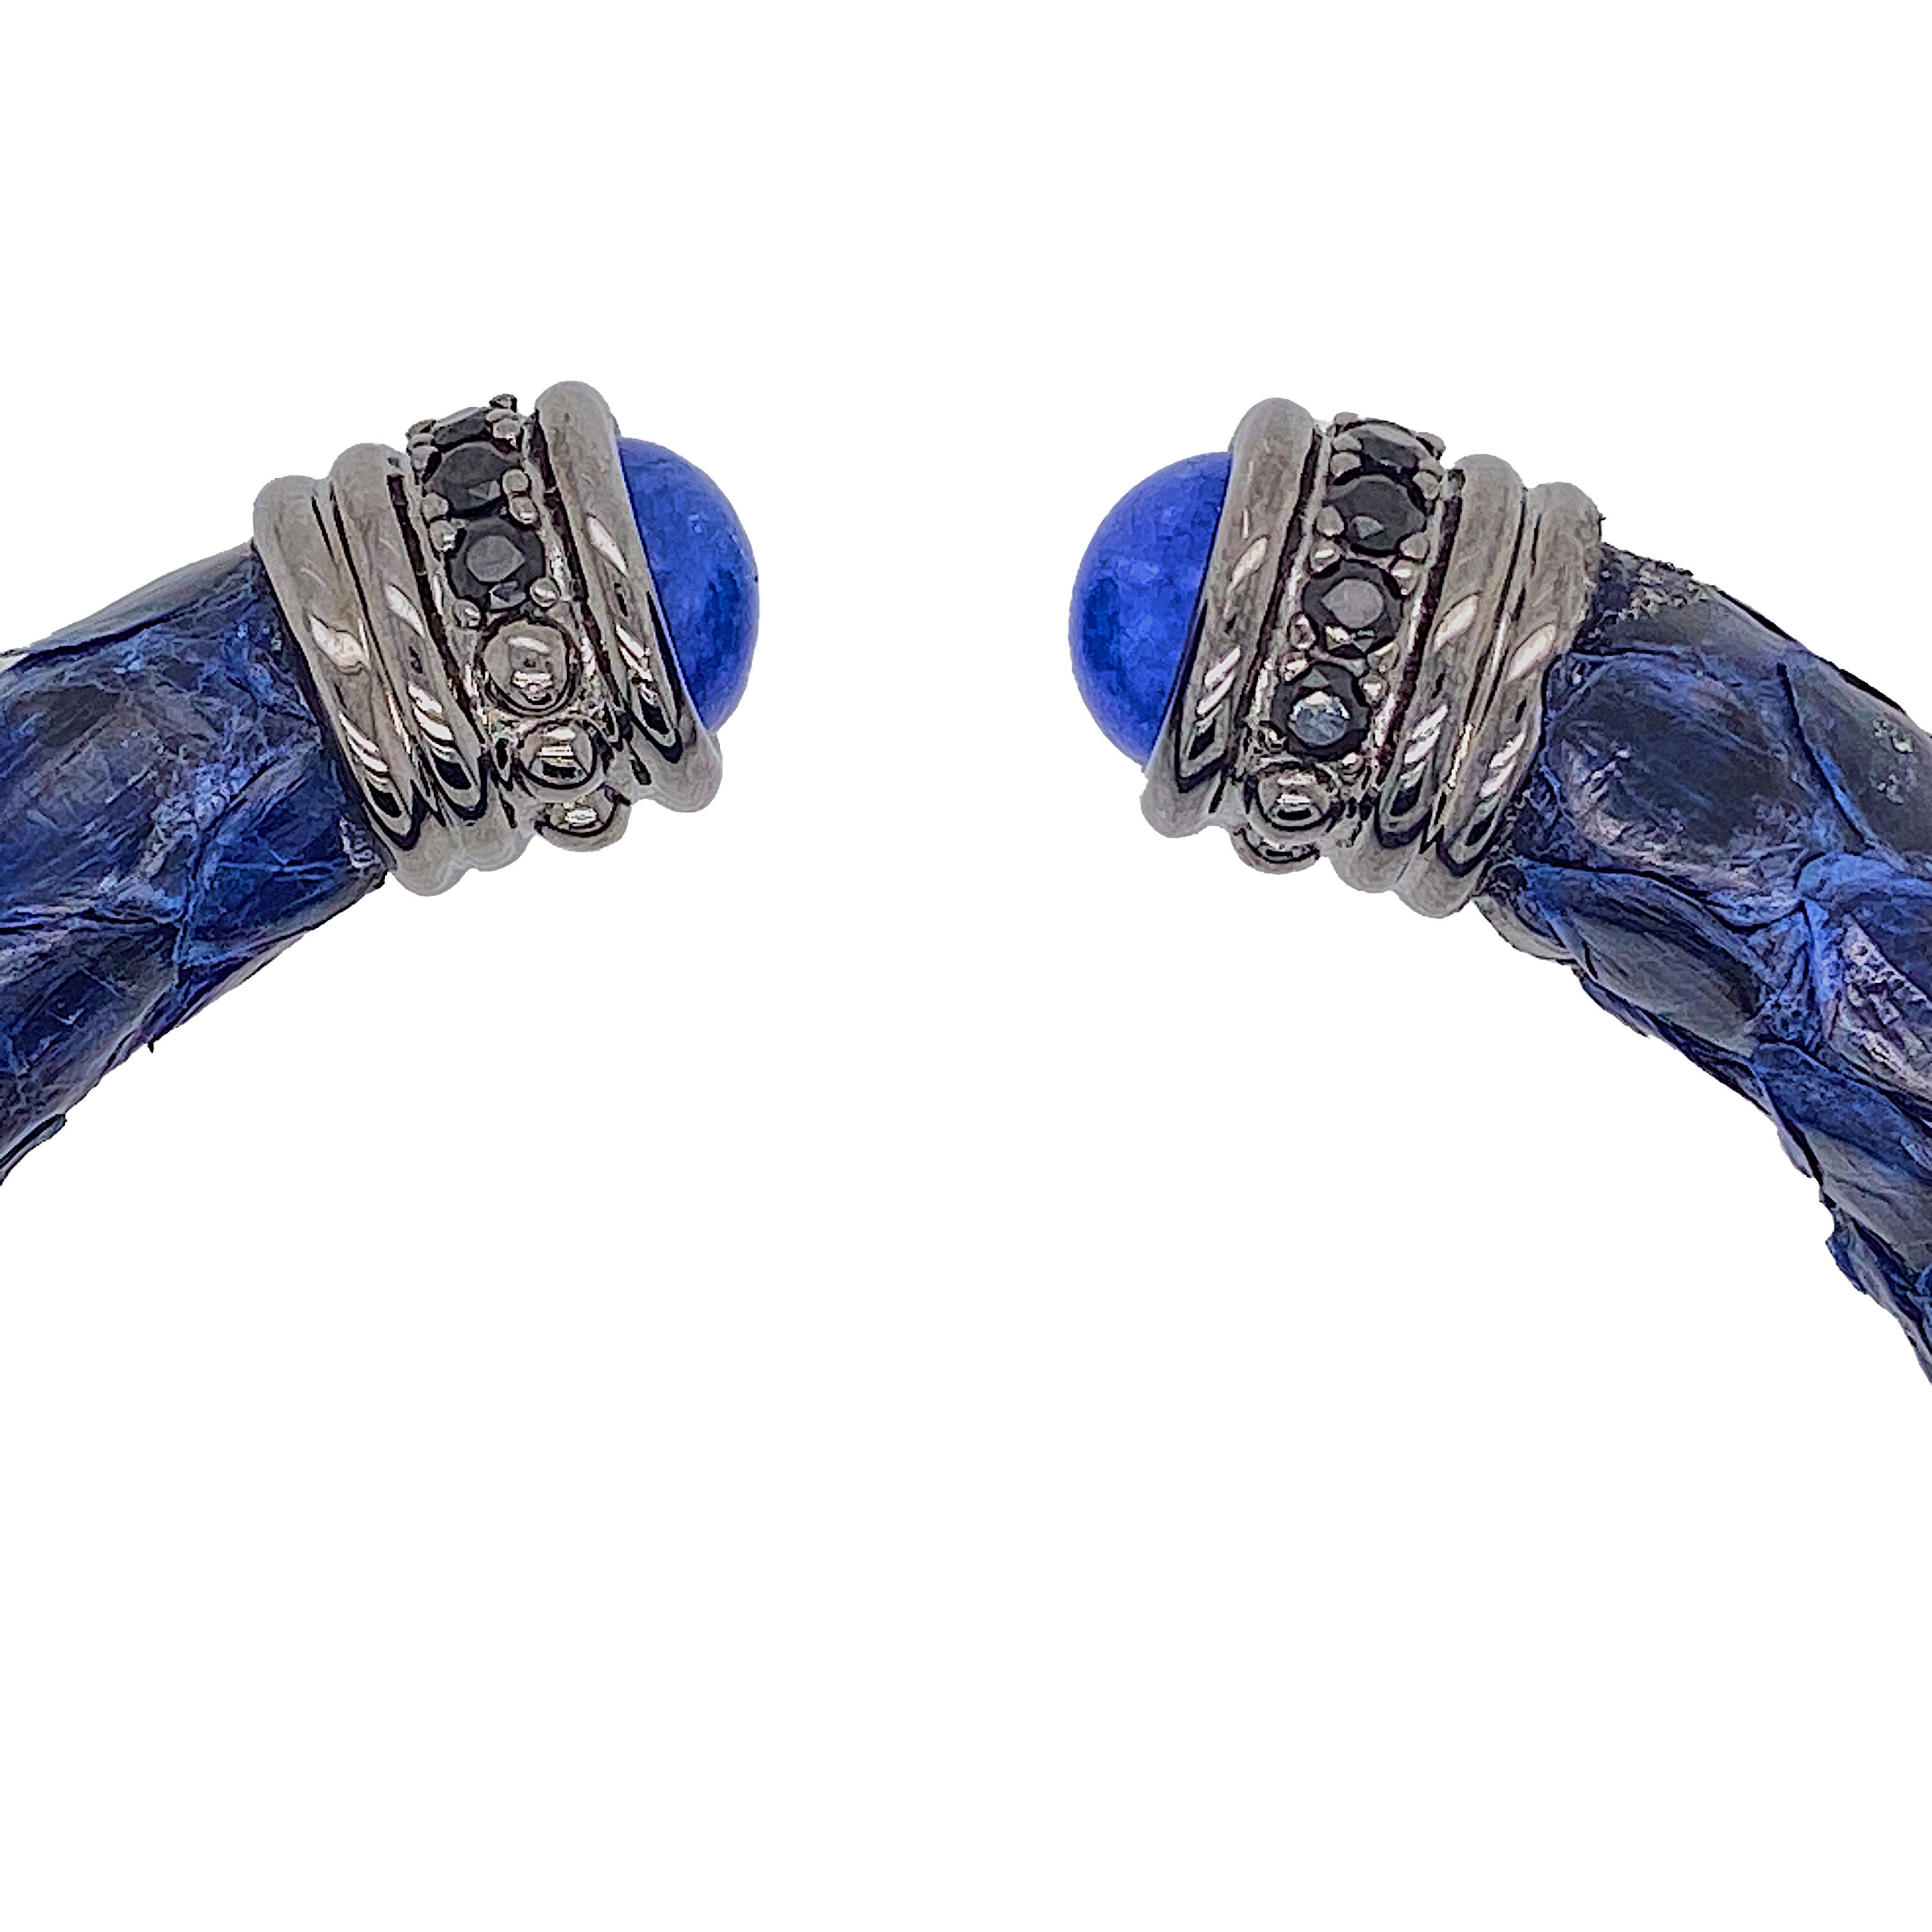 Lapis Lazuli Cap - Blue Python Bracelet